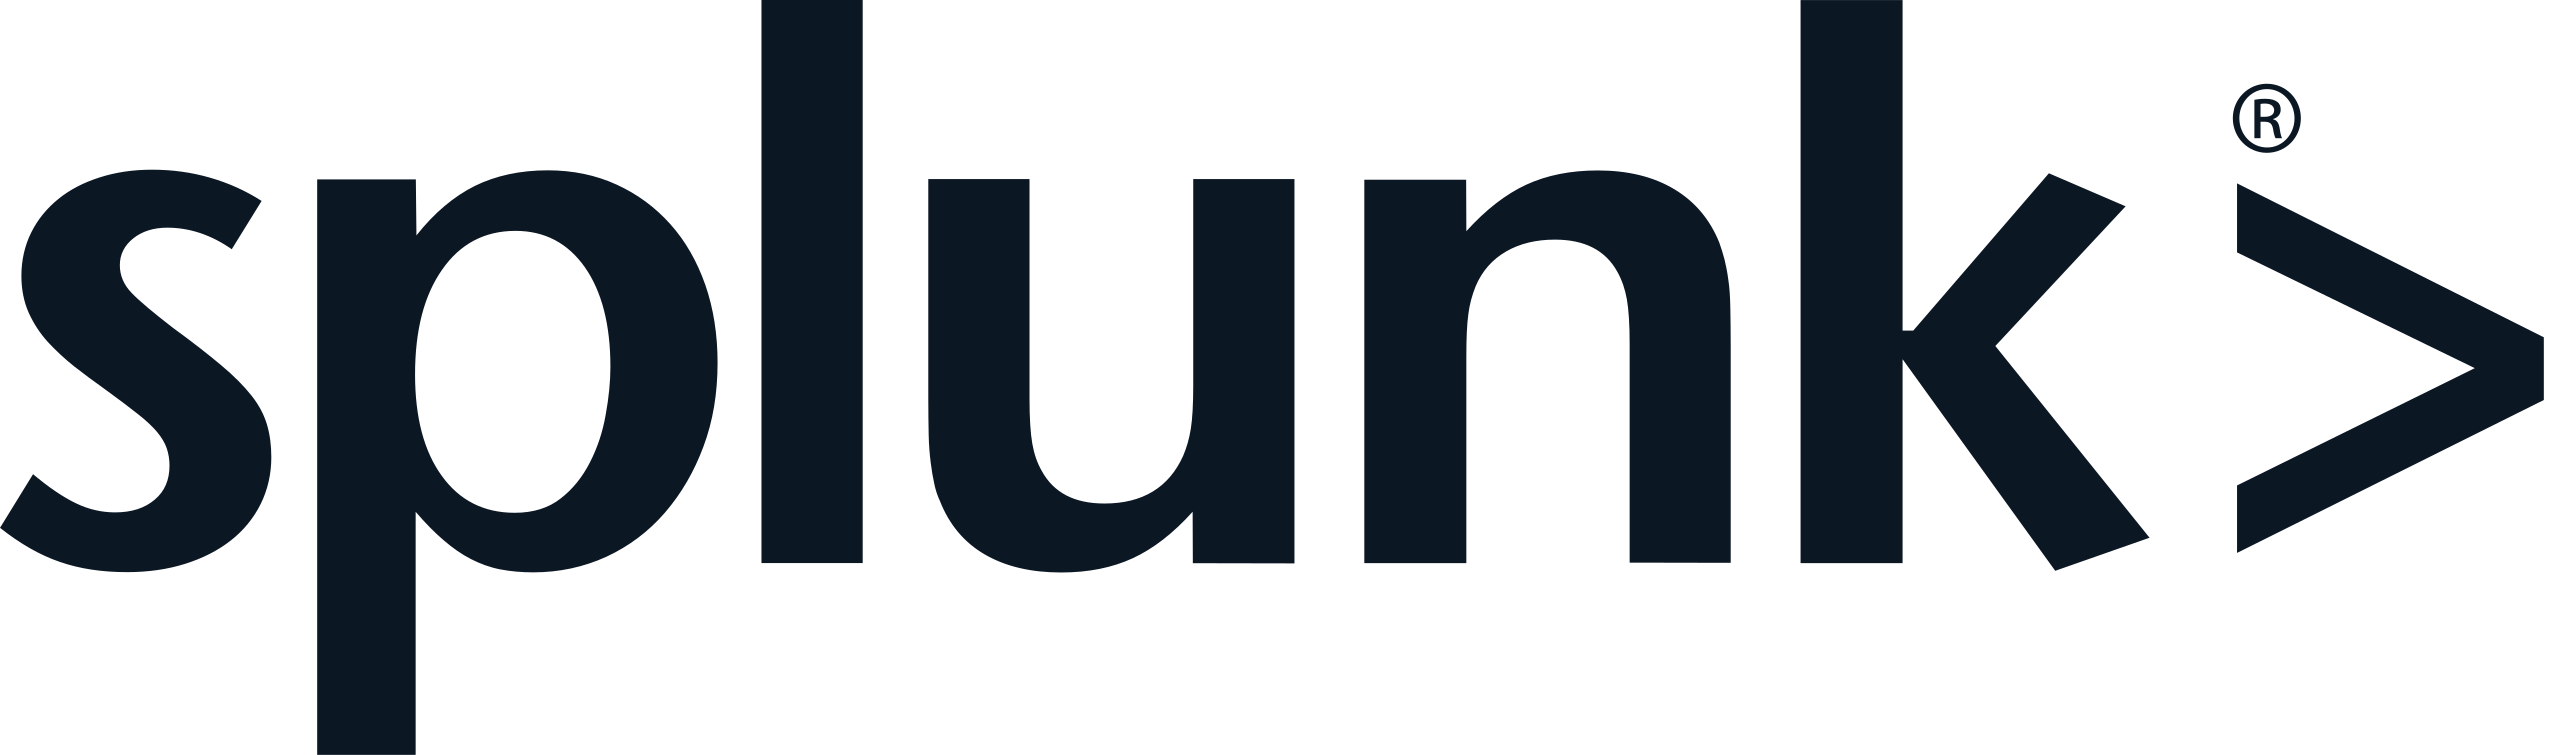 Splunk_logo-NEW